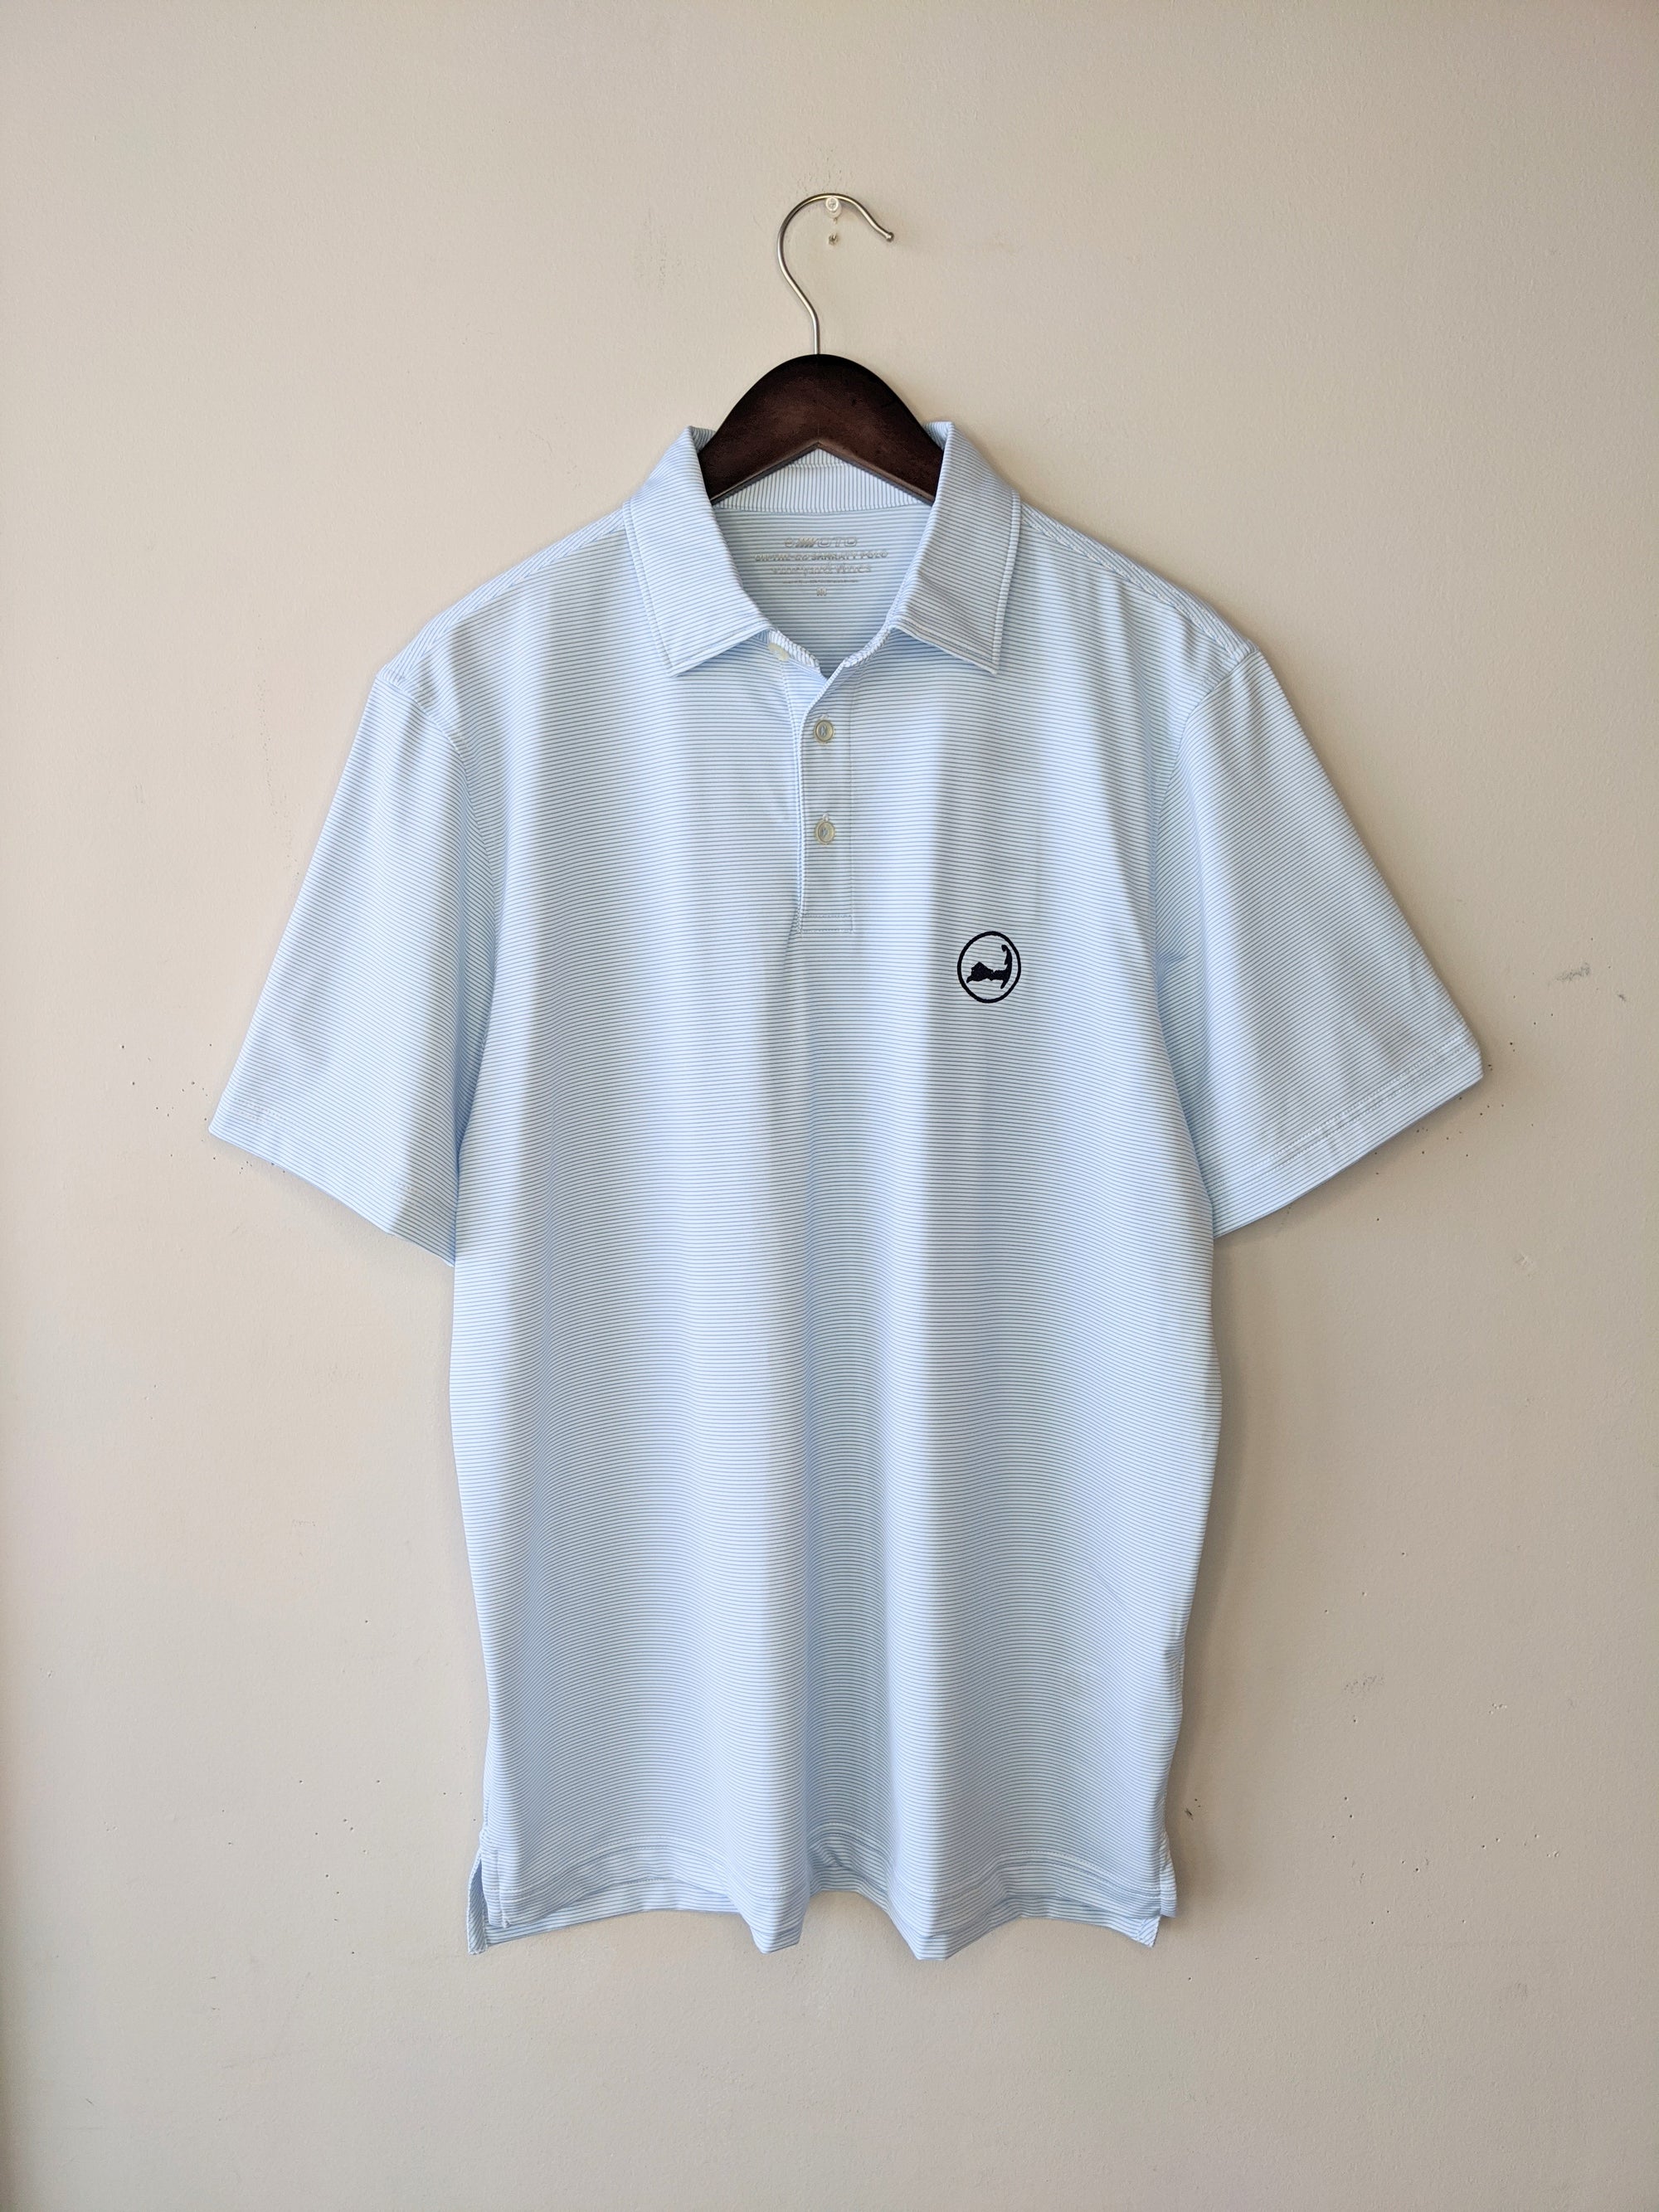 Vineyard Vines Men's Short Sleeve Whale Embroidery T-Shirt White